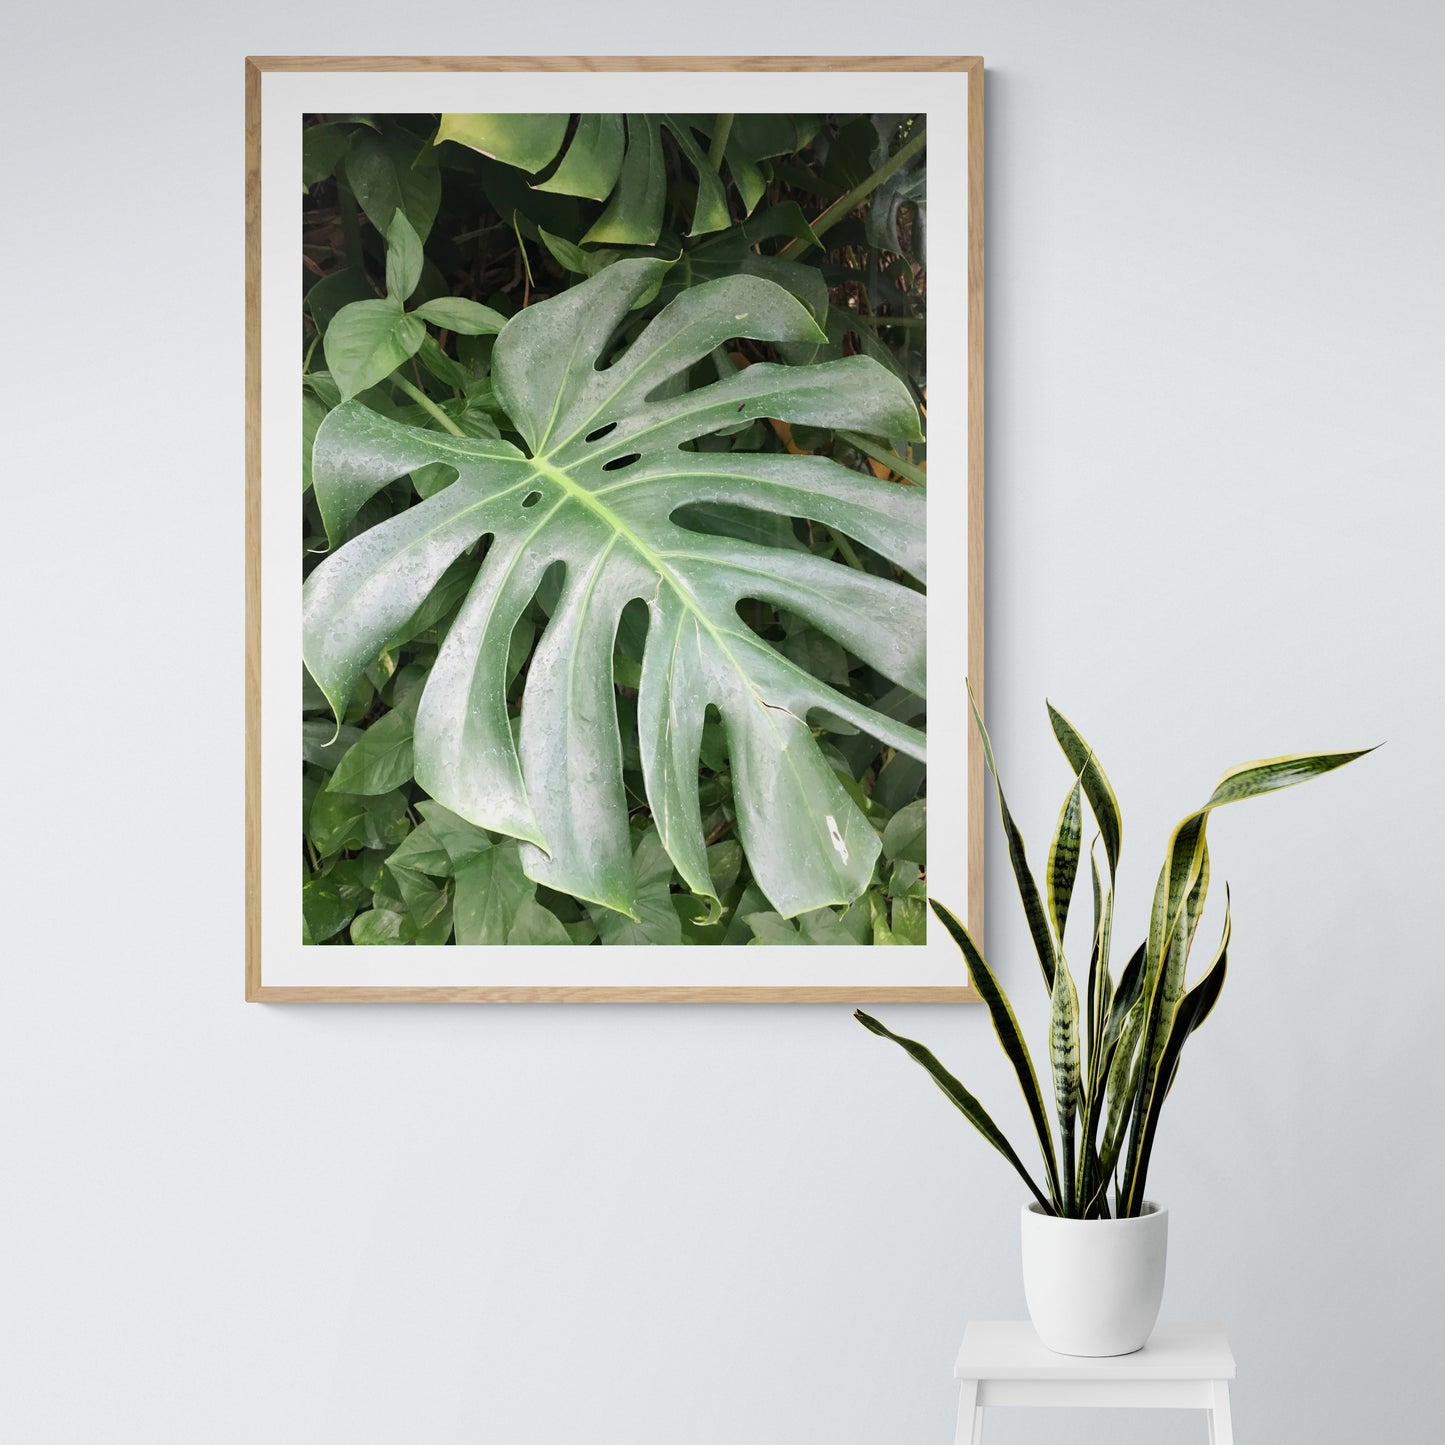 Monstera Photo, Original Tropical Plant Print, Nature Photography